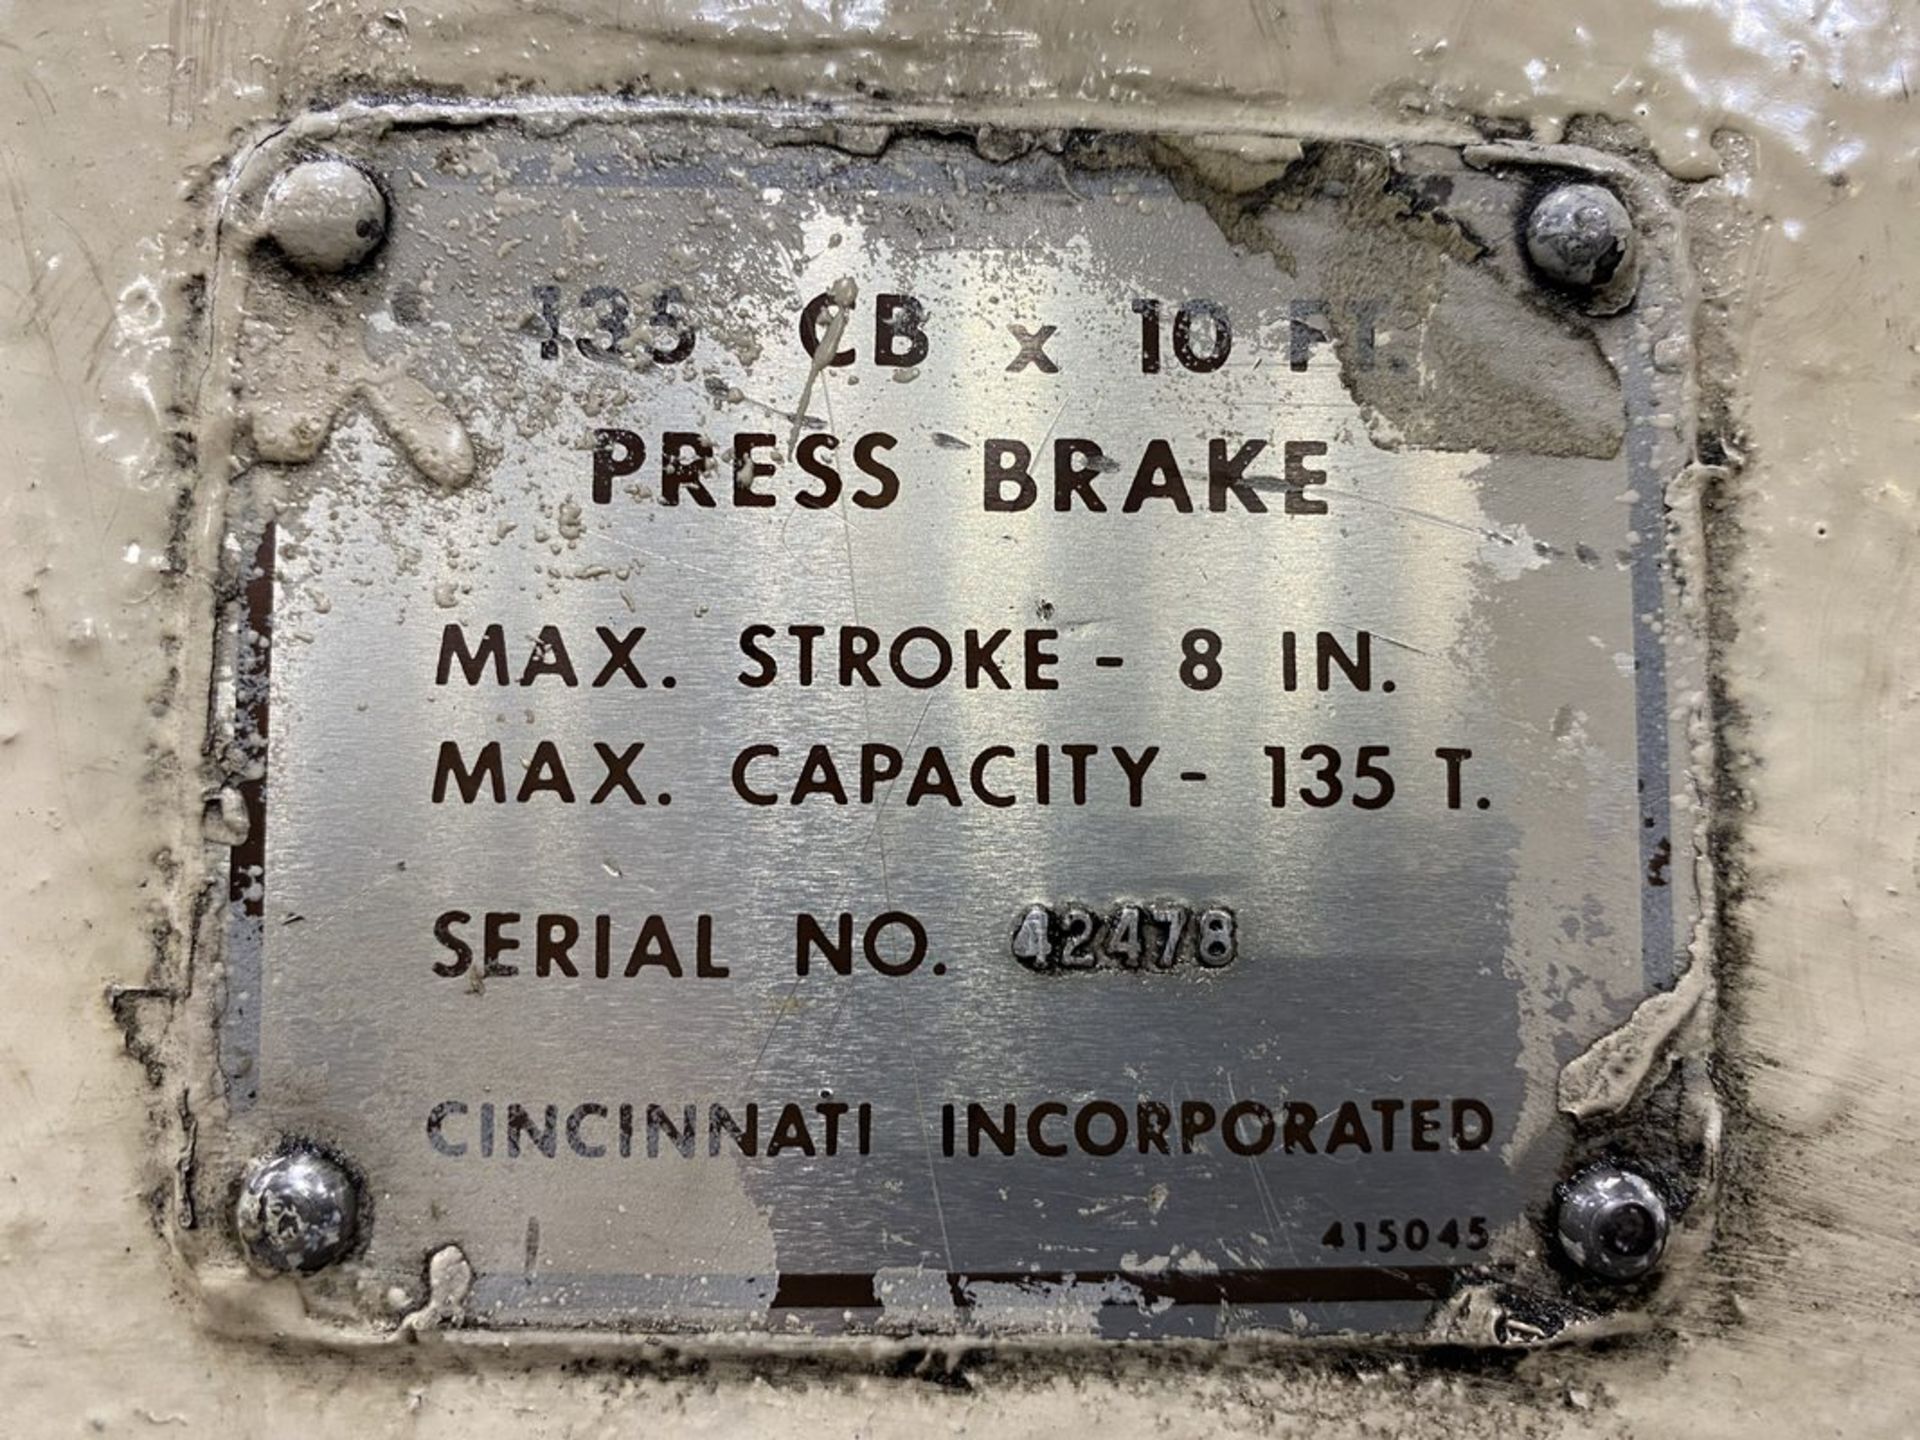 Cincinnati 135CBx10FT 135-Ton x 12' Hydraulic Press Brake, S/N 42478 - Image 19 of 19